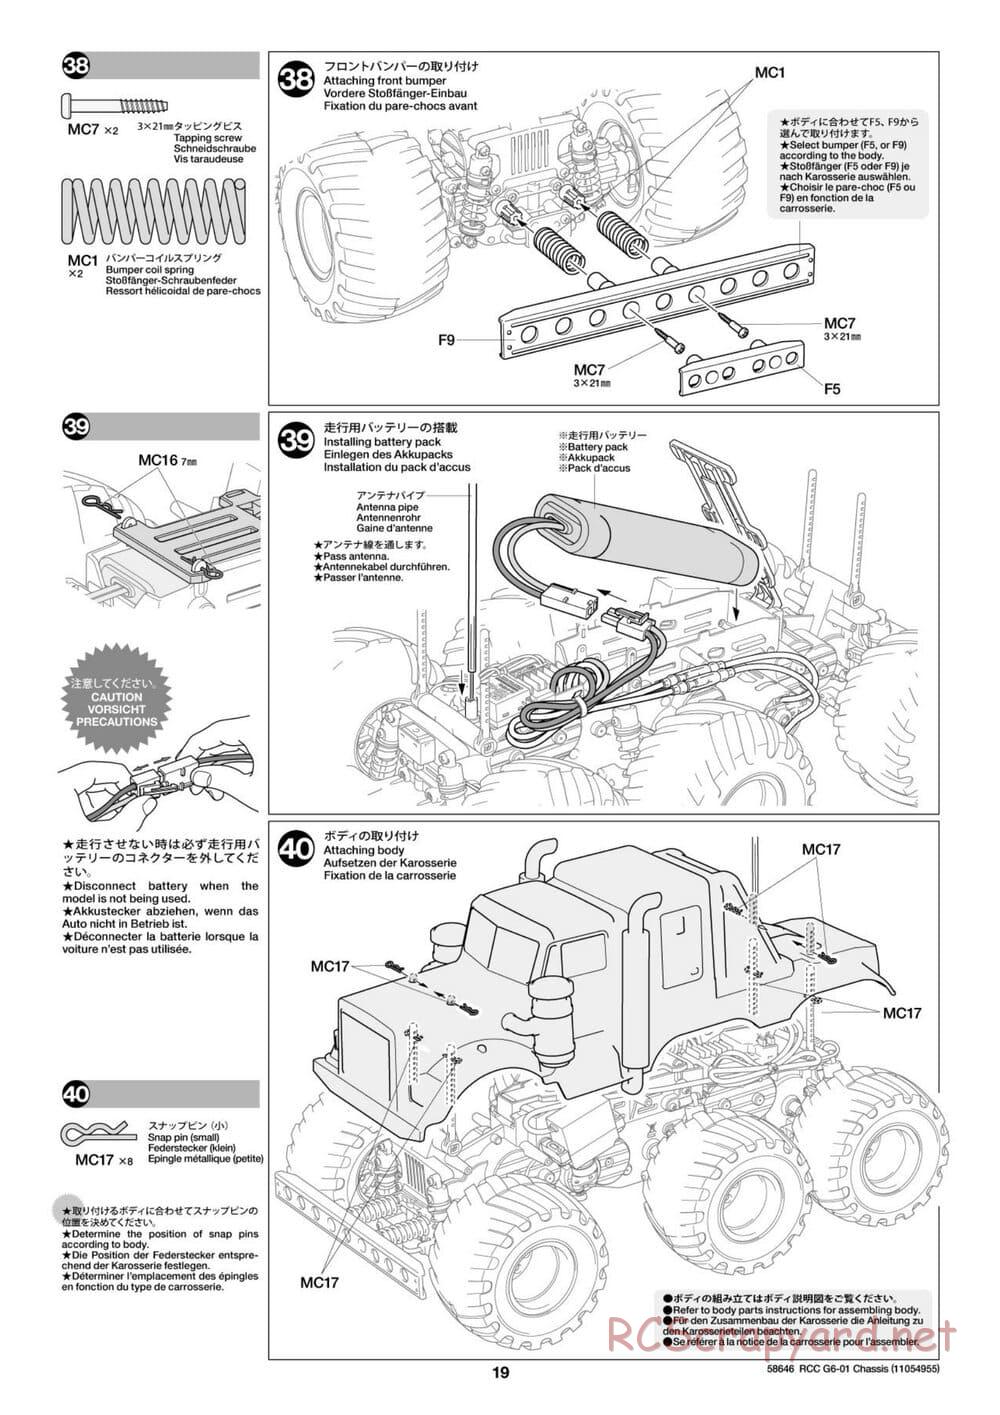 Tamiya - Konghead 6x6 - G6-01 Chassis - Manual - Page 19